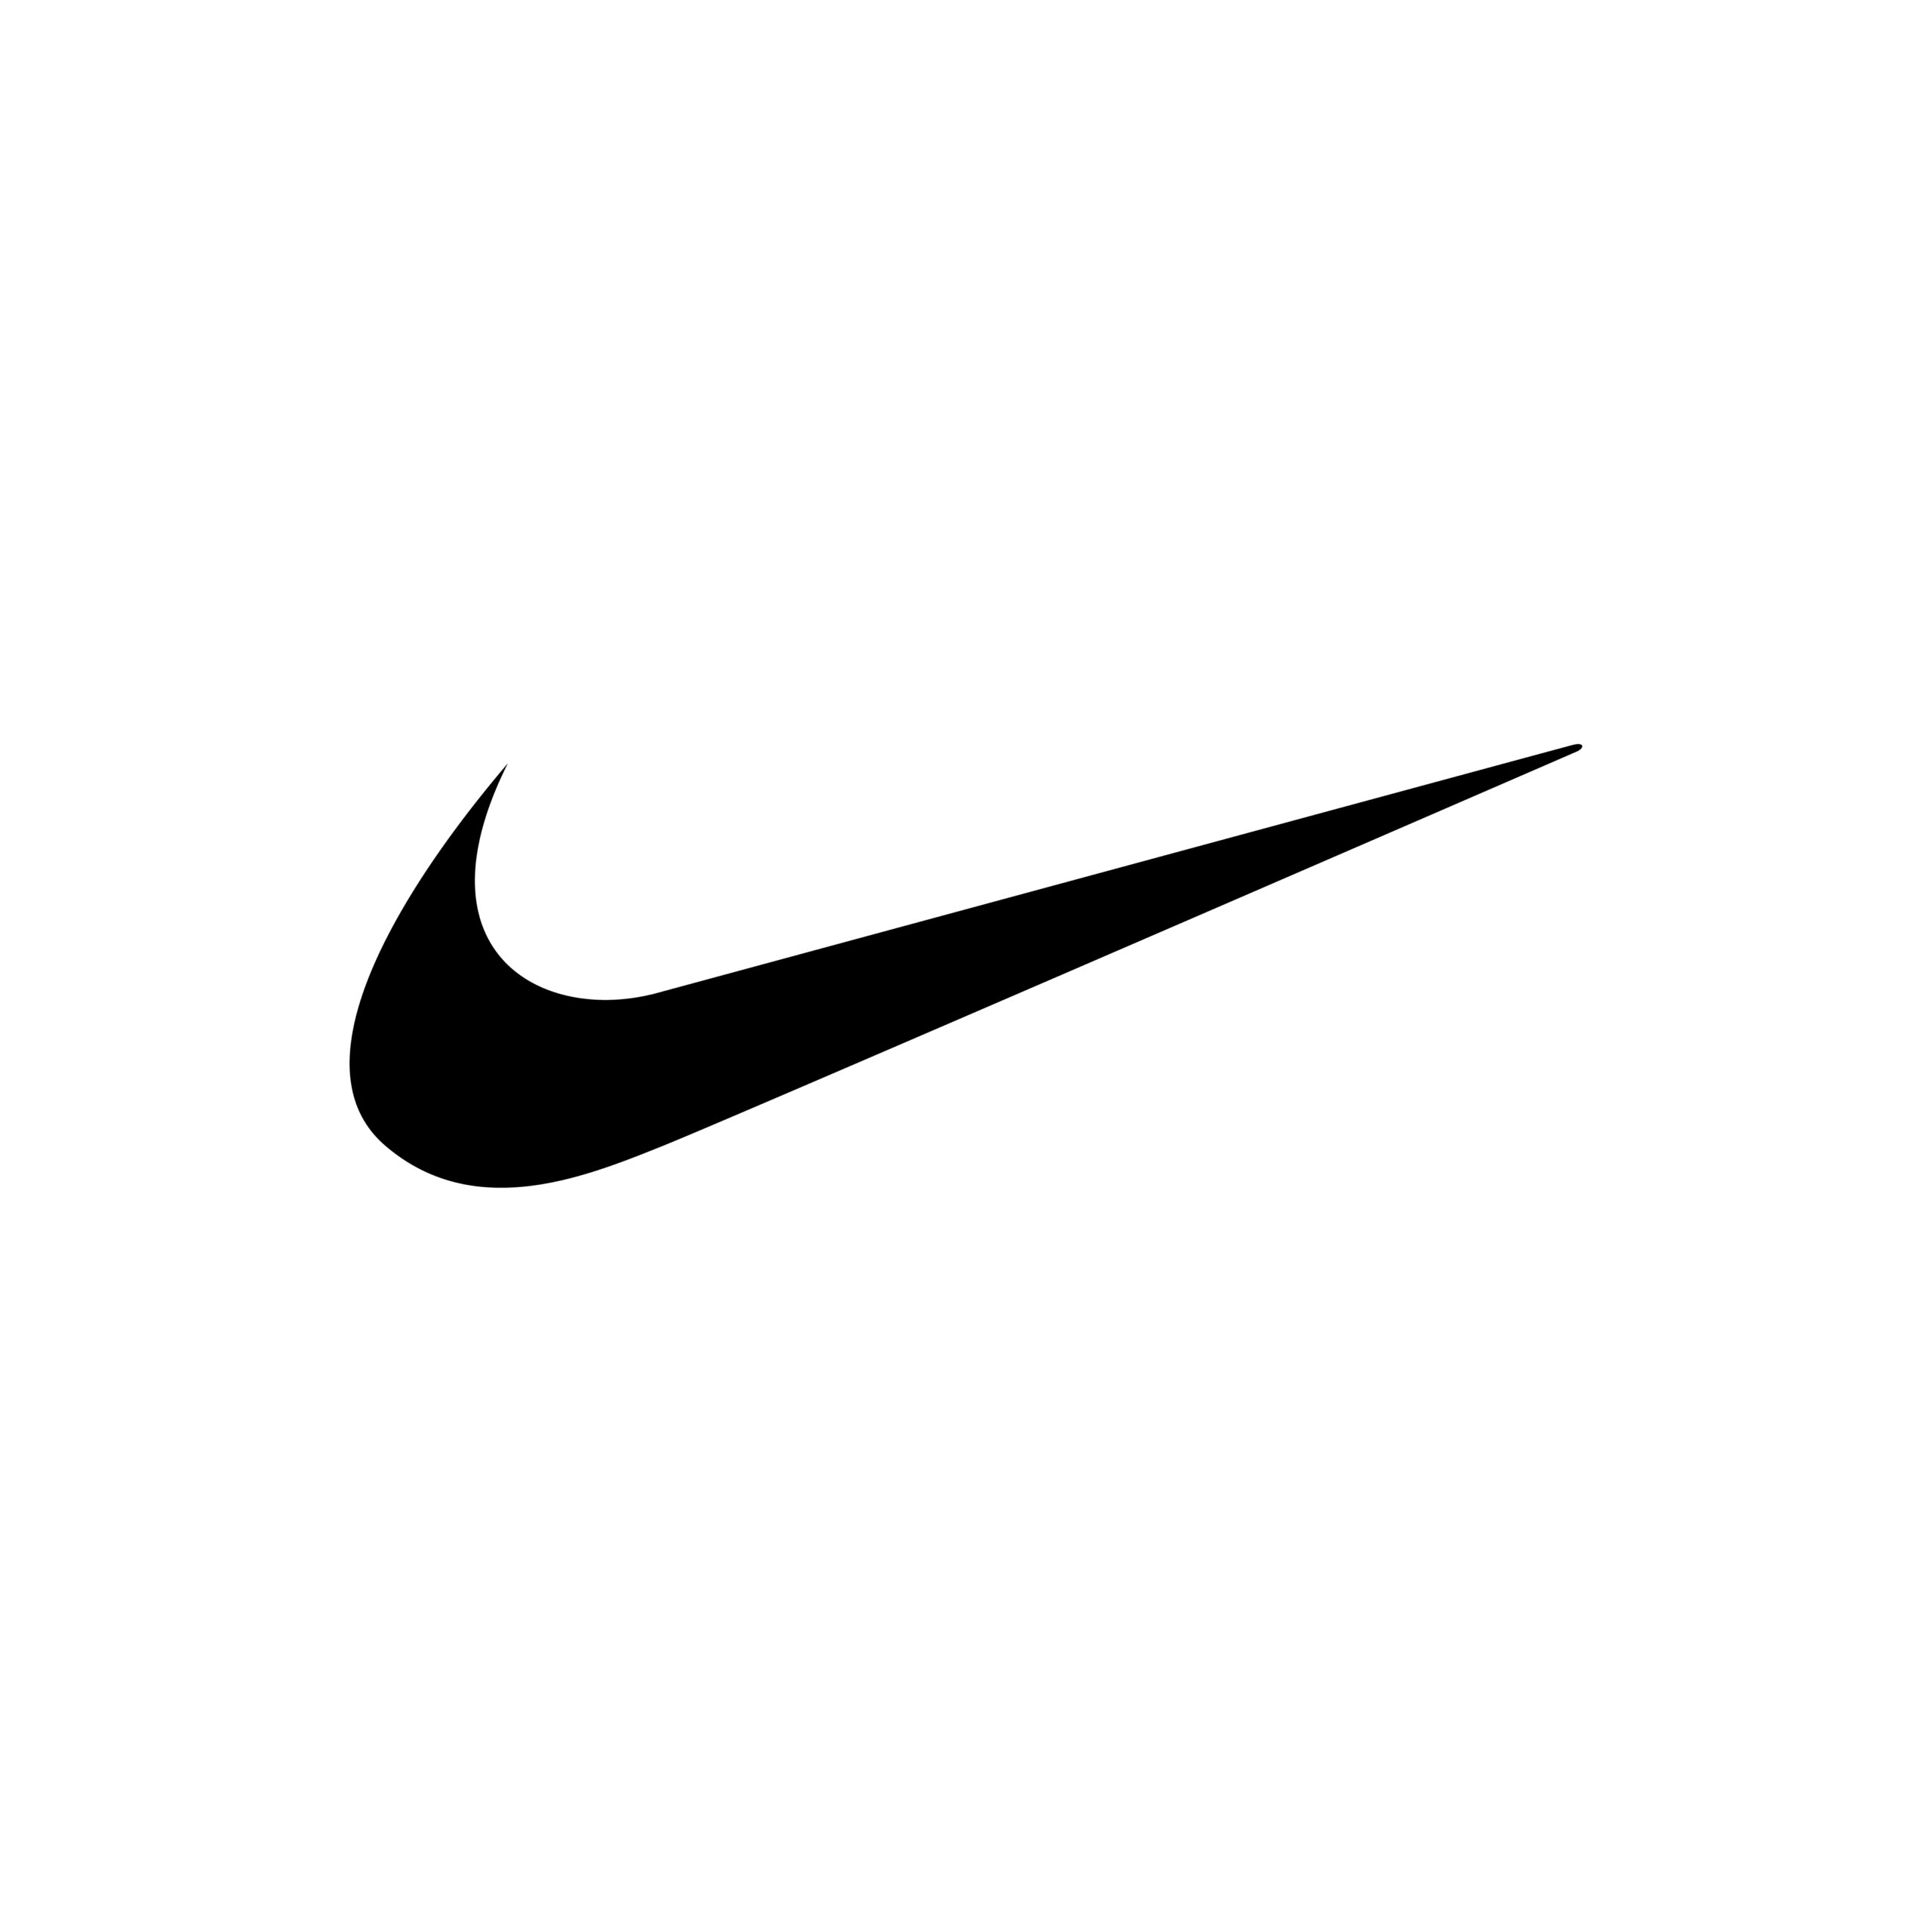 Nike Just Do It SVG, Nike Air PNG, Nike Logo Transparent, Nike Logo Vector